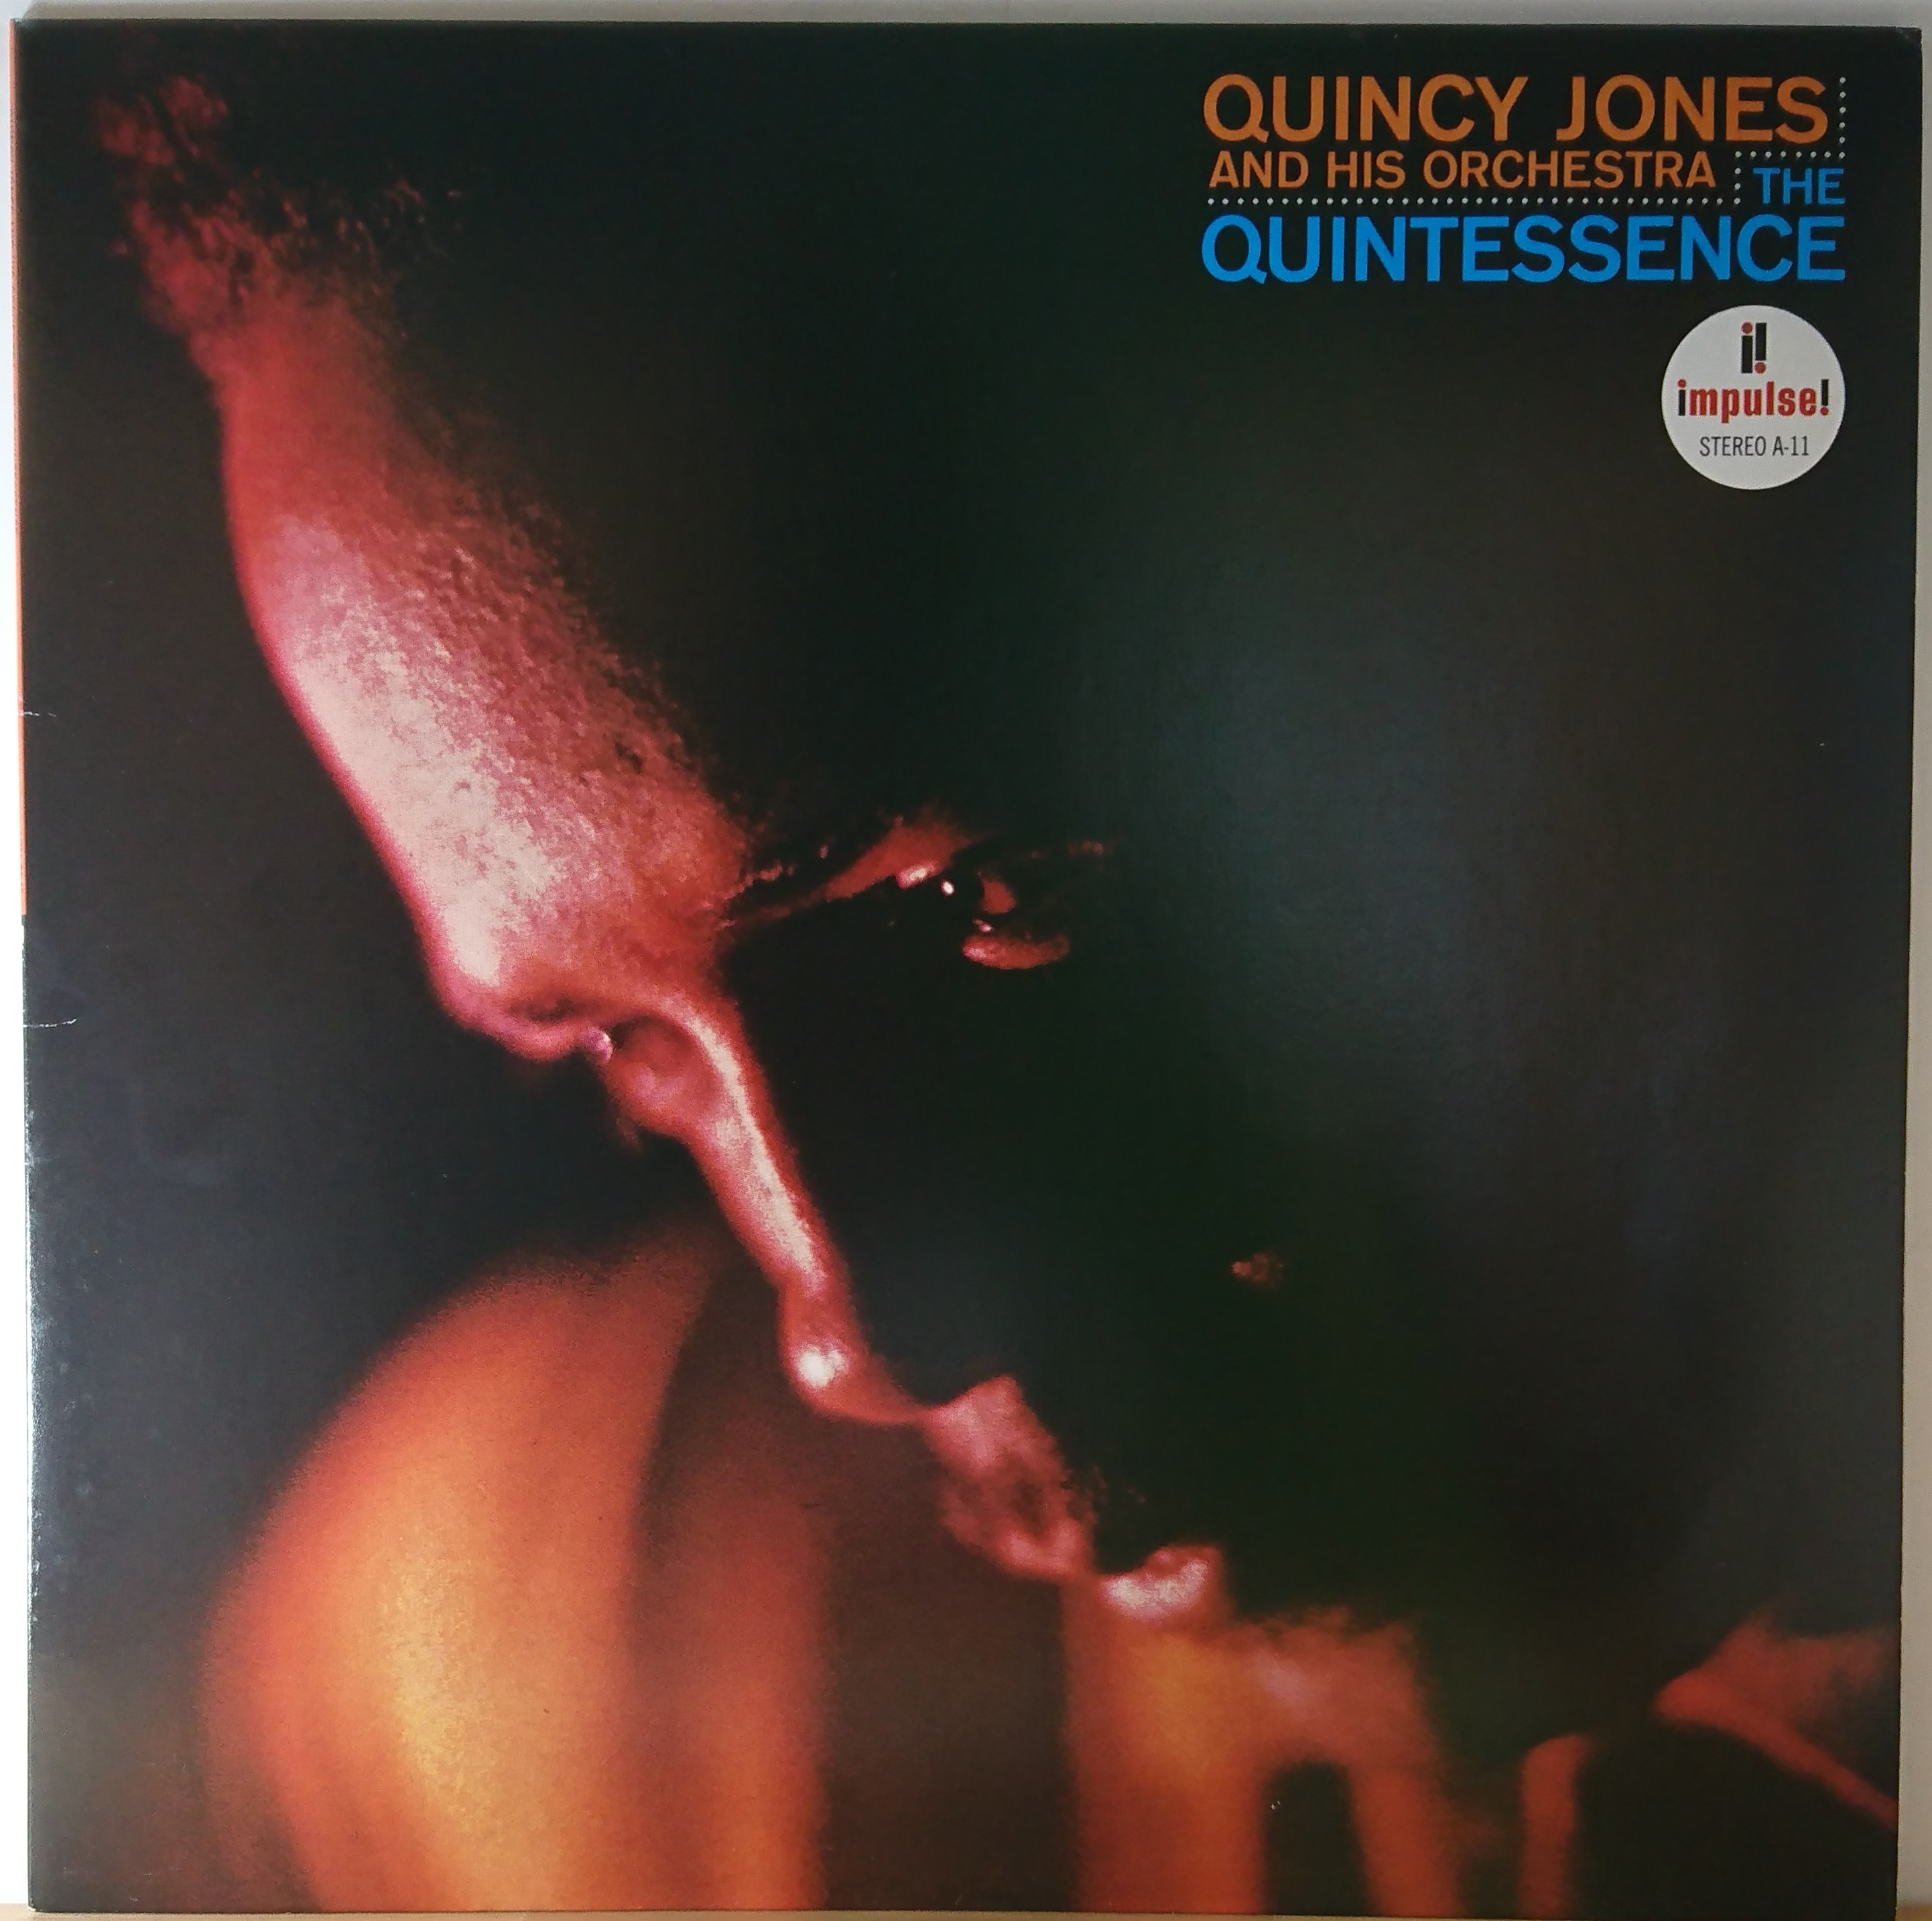 Quincy Jones And His Orchestra ‎– The Quintessence | 中古レコード通販・買取のアカル・レコーズ